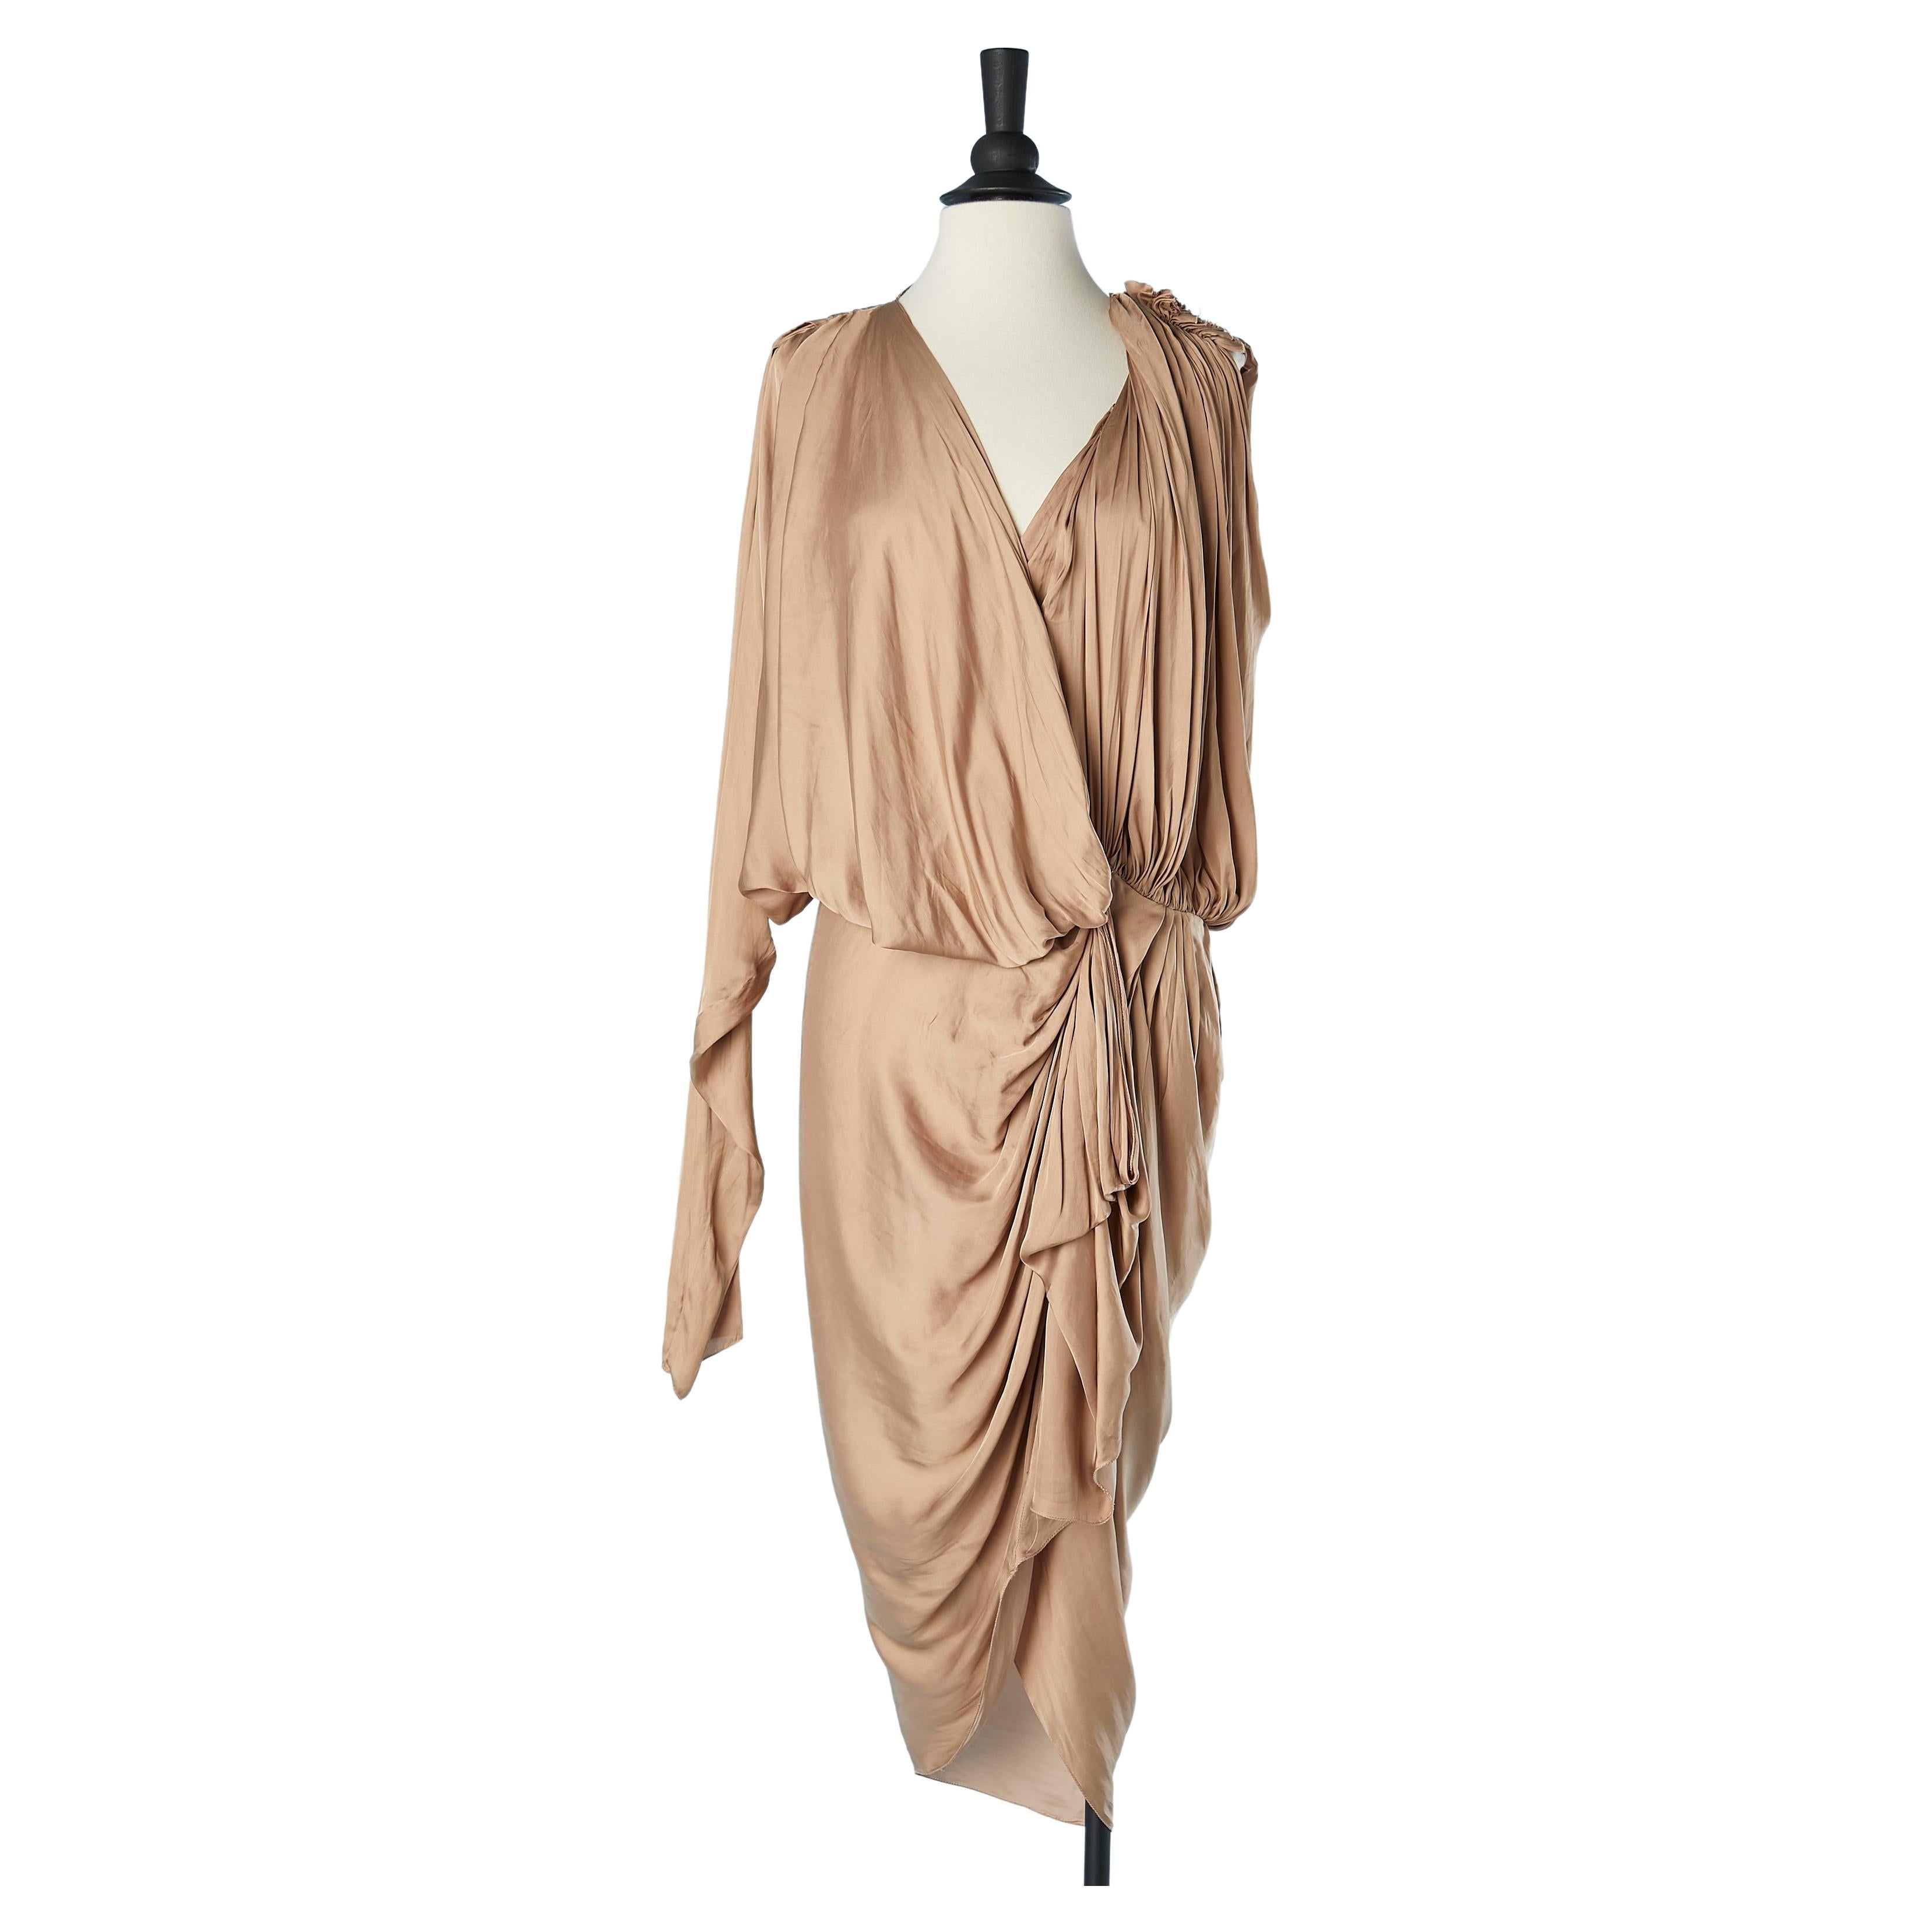 Beige asymmetrical and drape silky cocktail dress Lanvin by Alber Elbaz